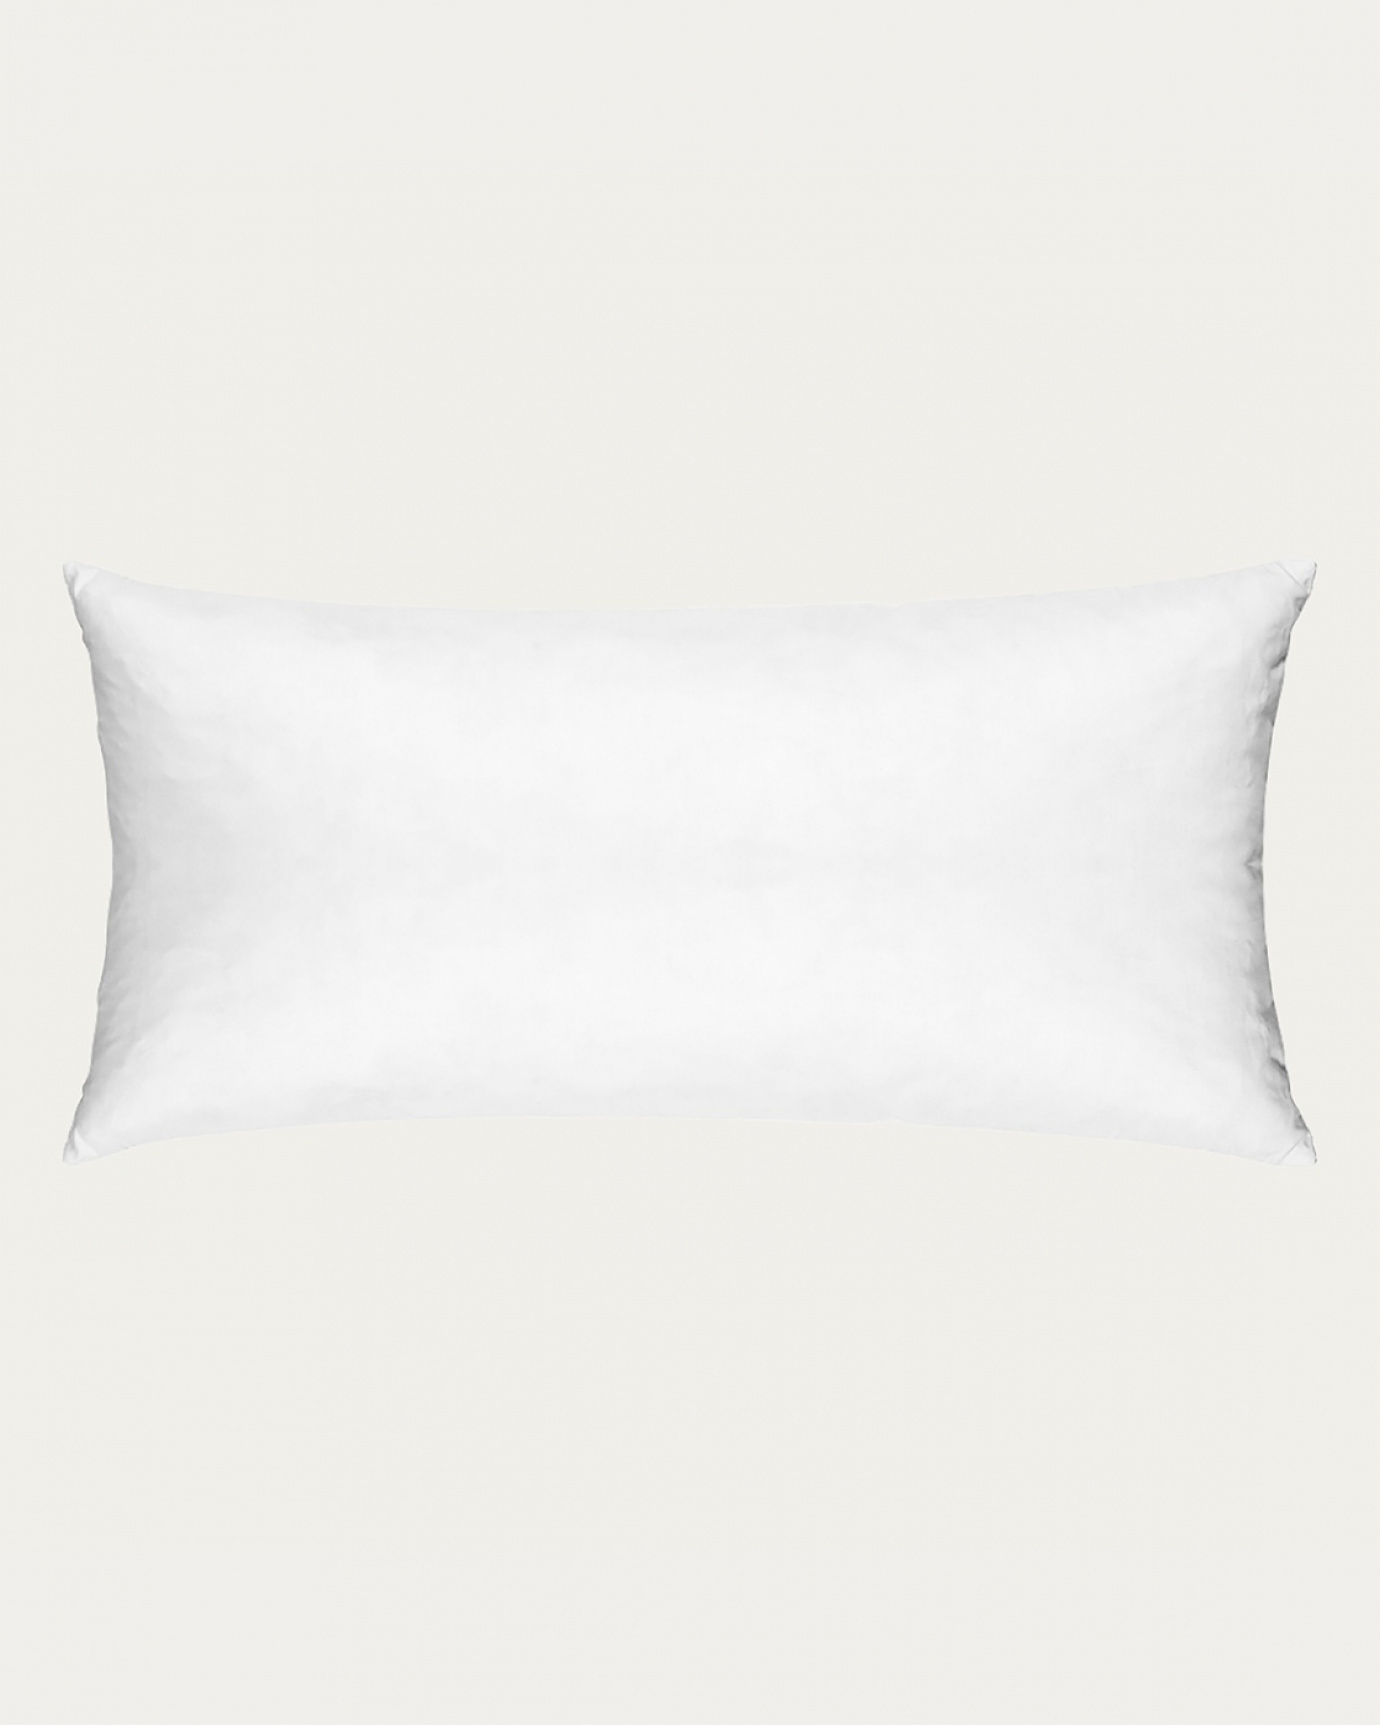 Produktbild vit SYNTHETIC innerkudde av bomull med polyesterfyllning från LINUM DESIGN. Storlek 35x70 cm.